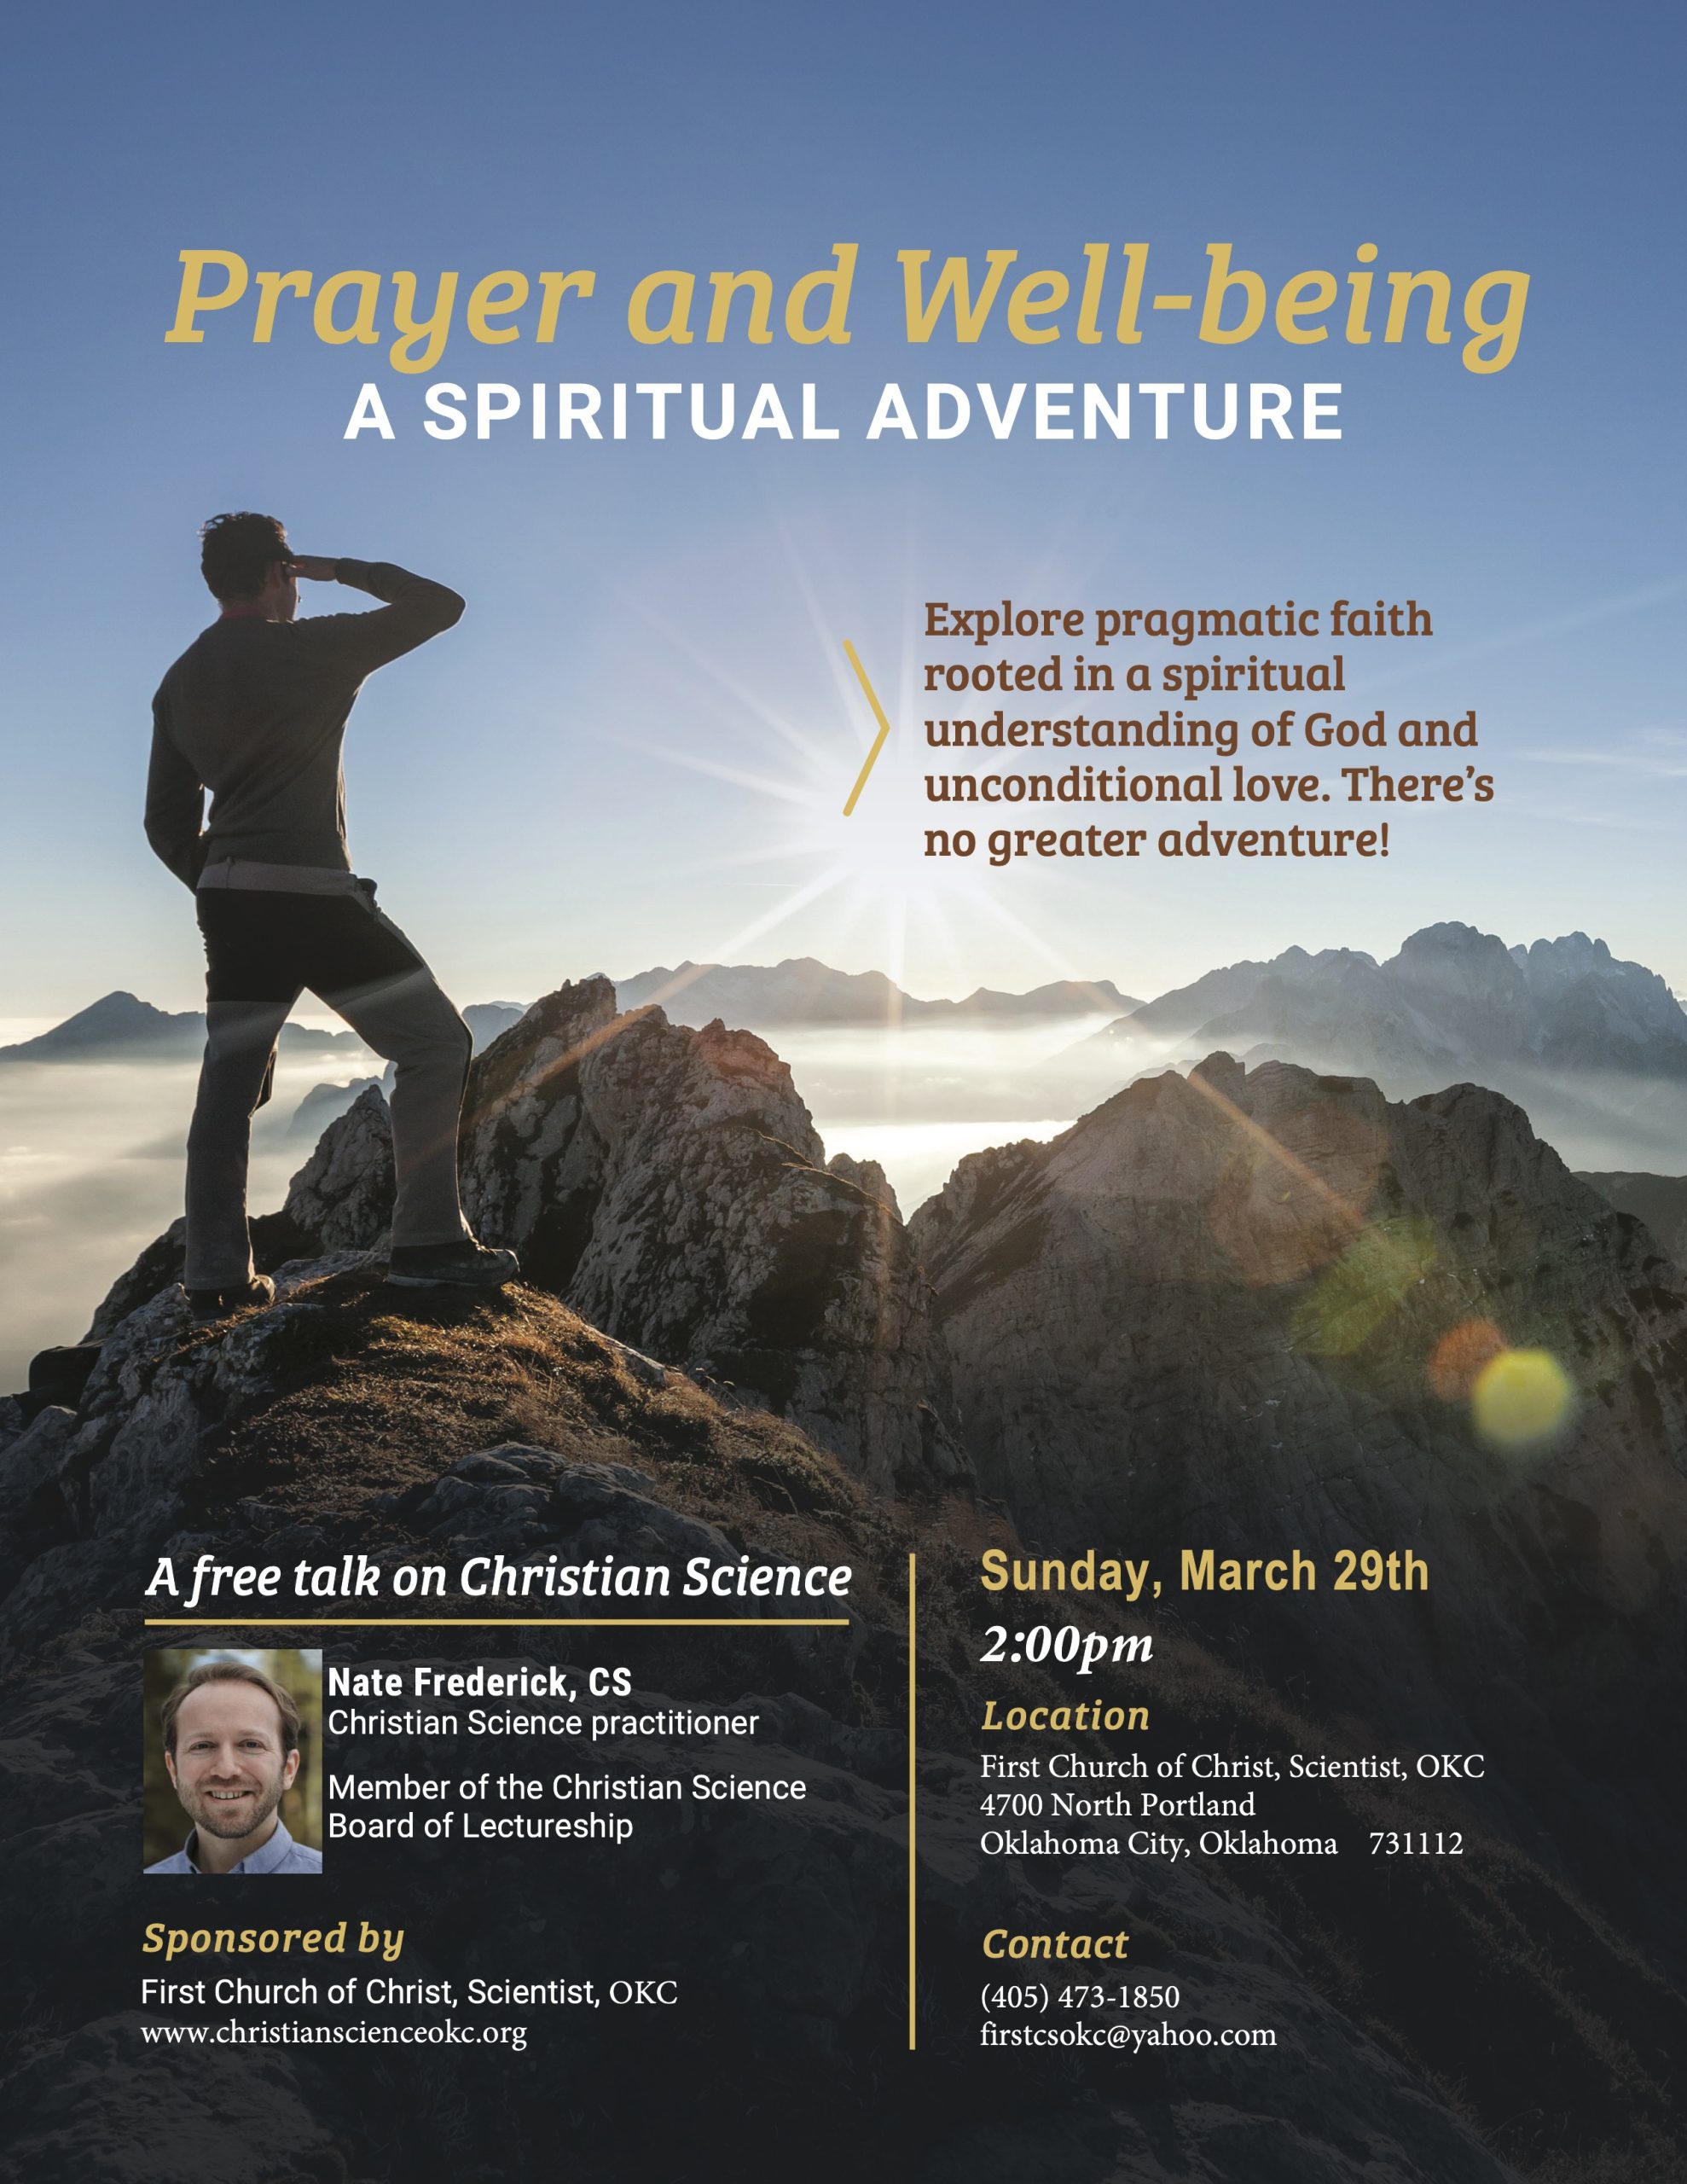 "Prayer and Well-being: A Spiritual Adventure"